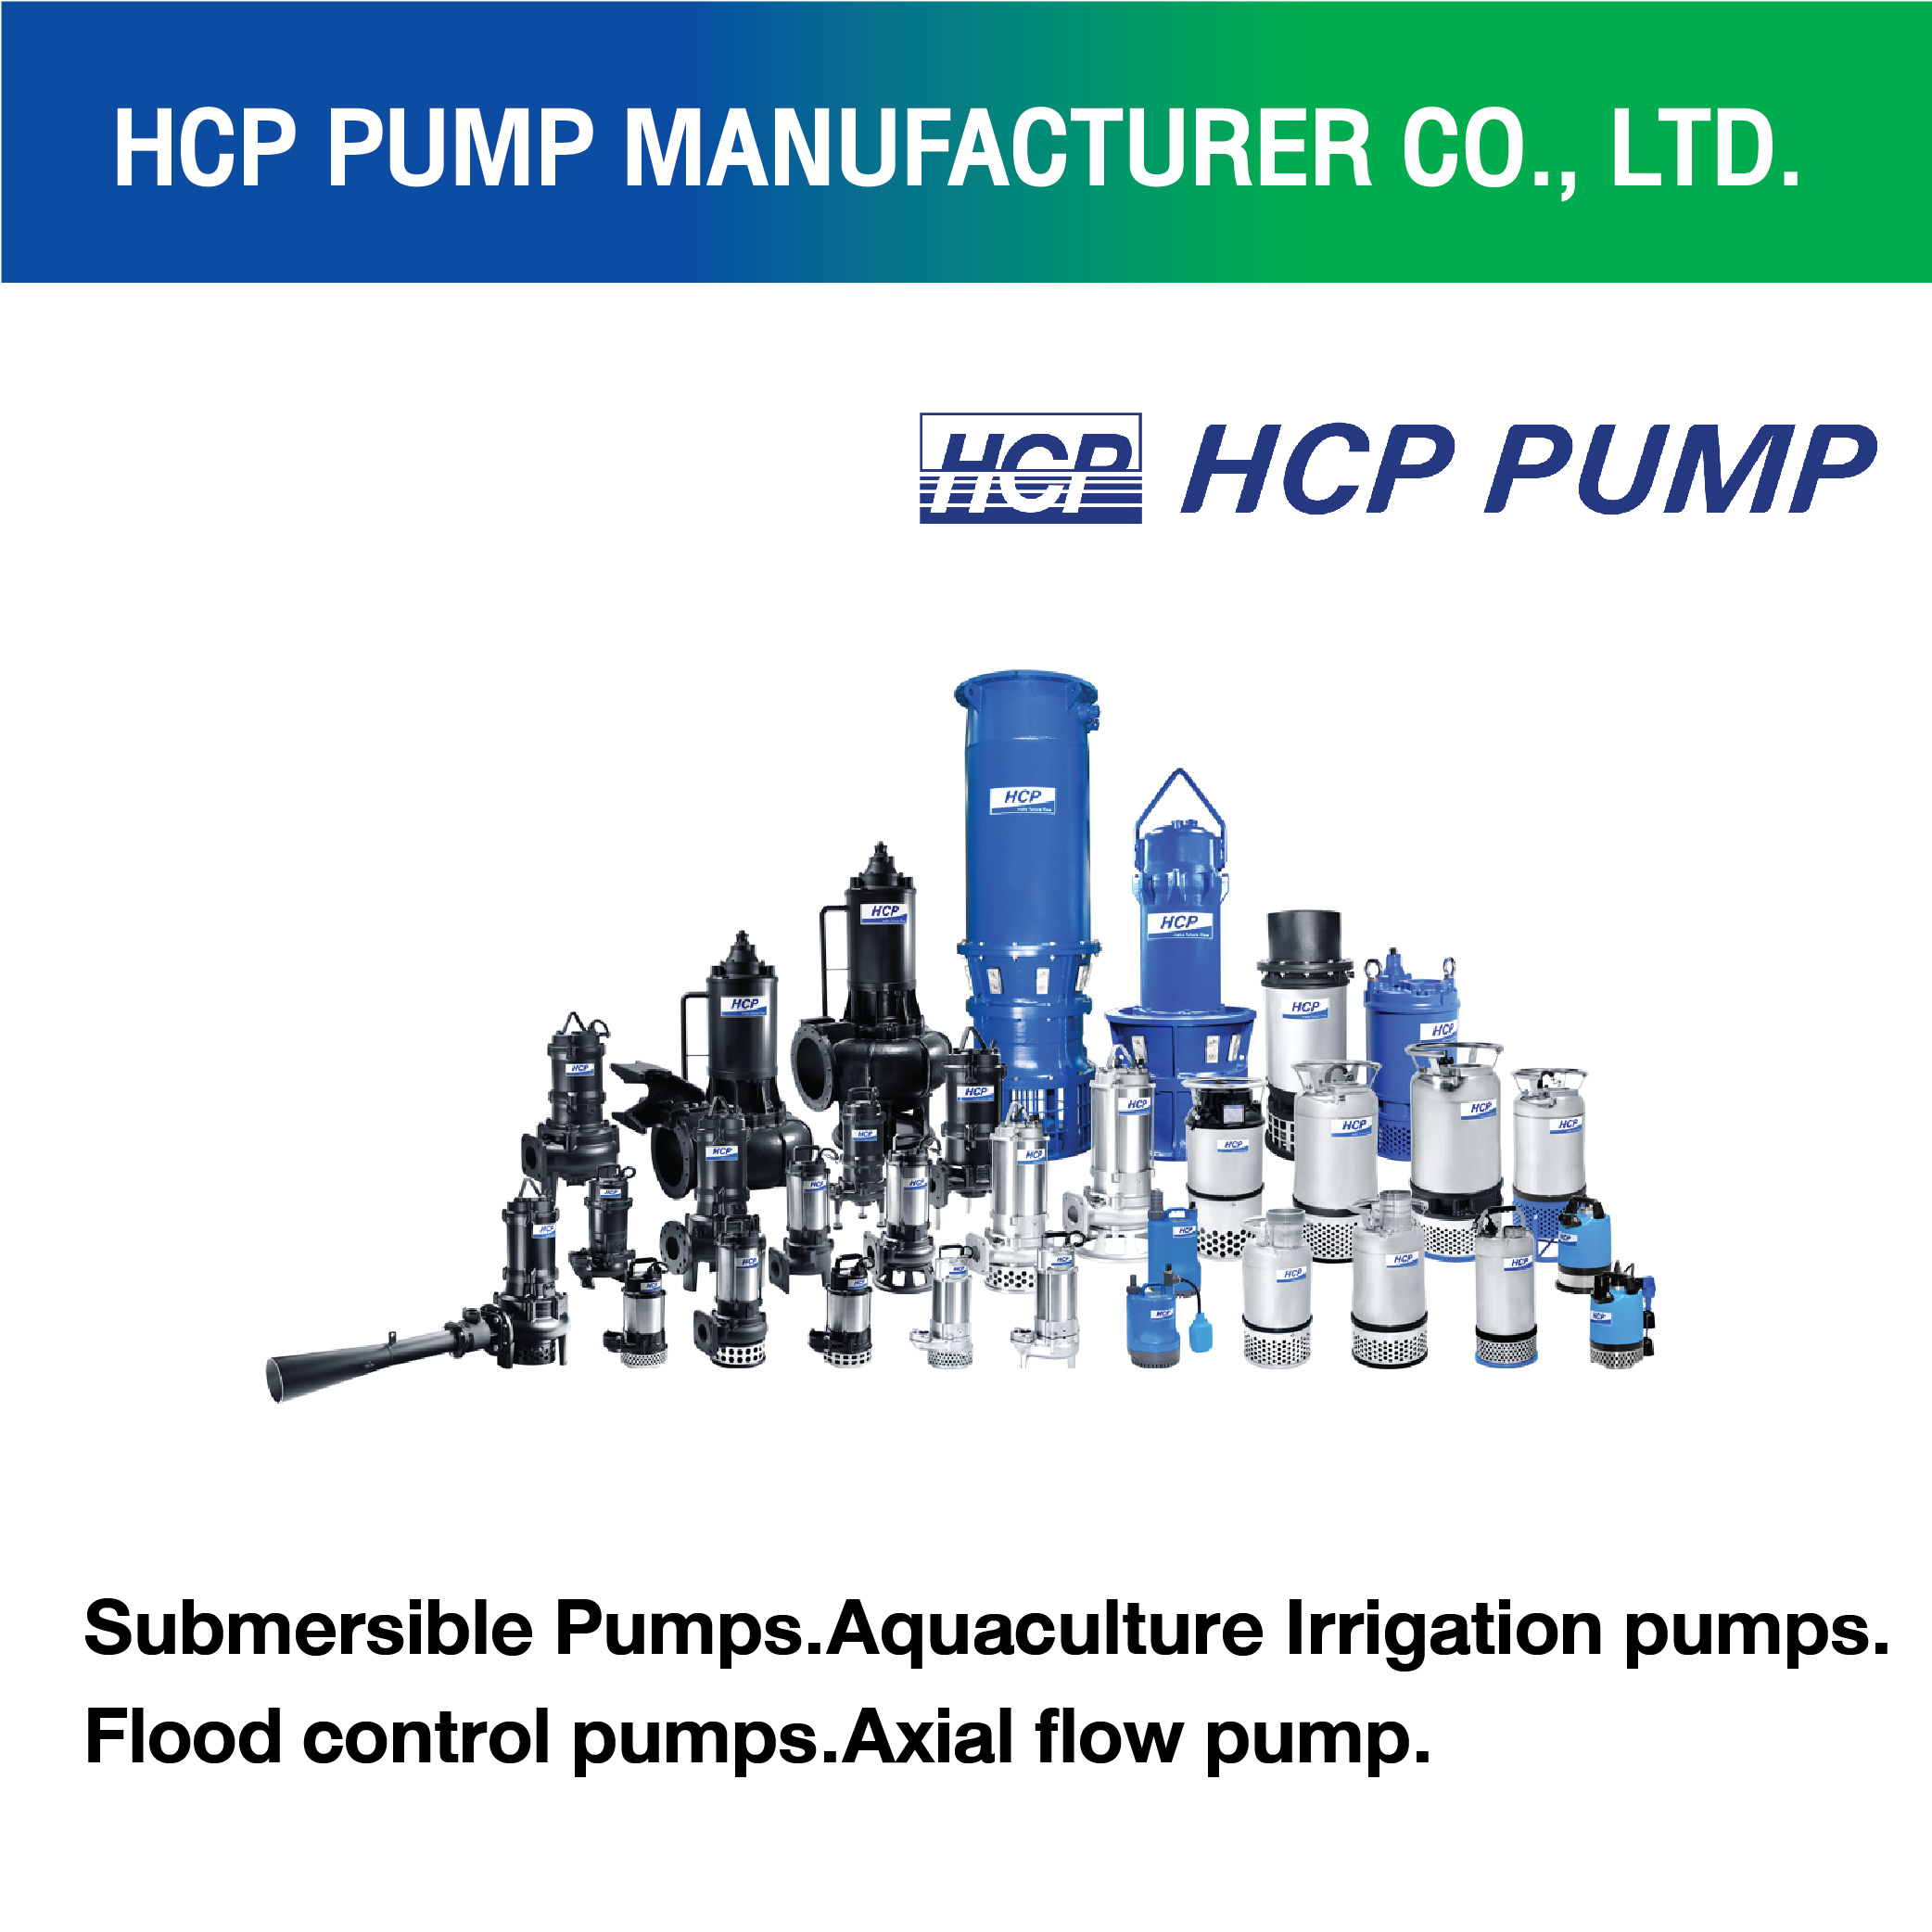 HCP Pump Manufacturer Co., Ltd.